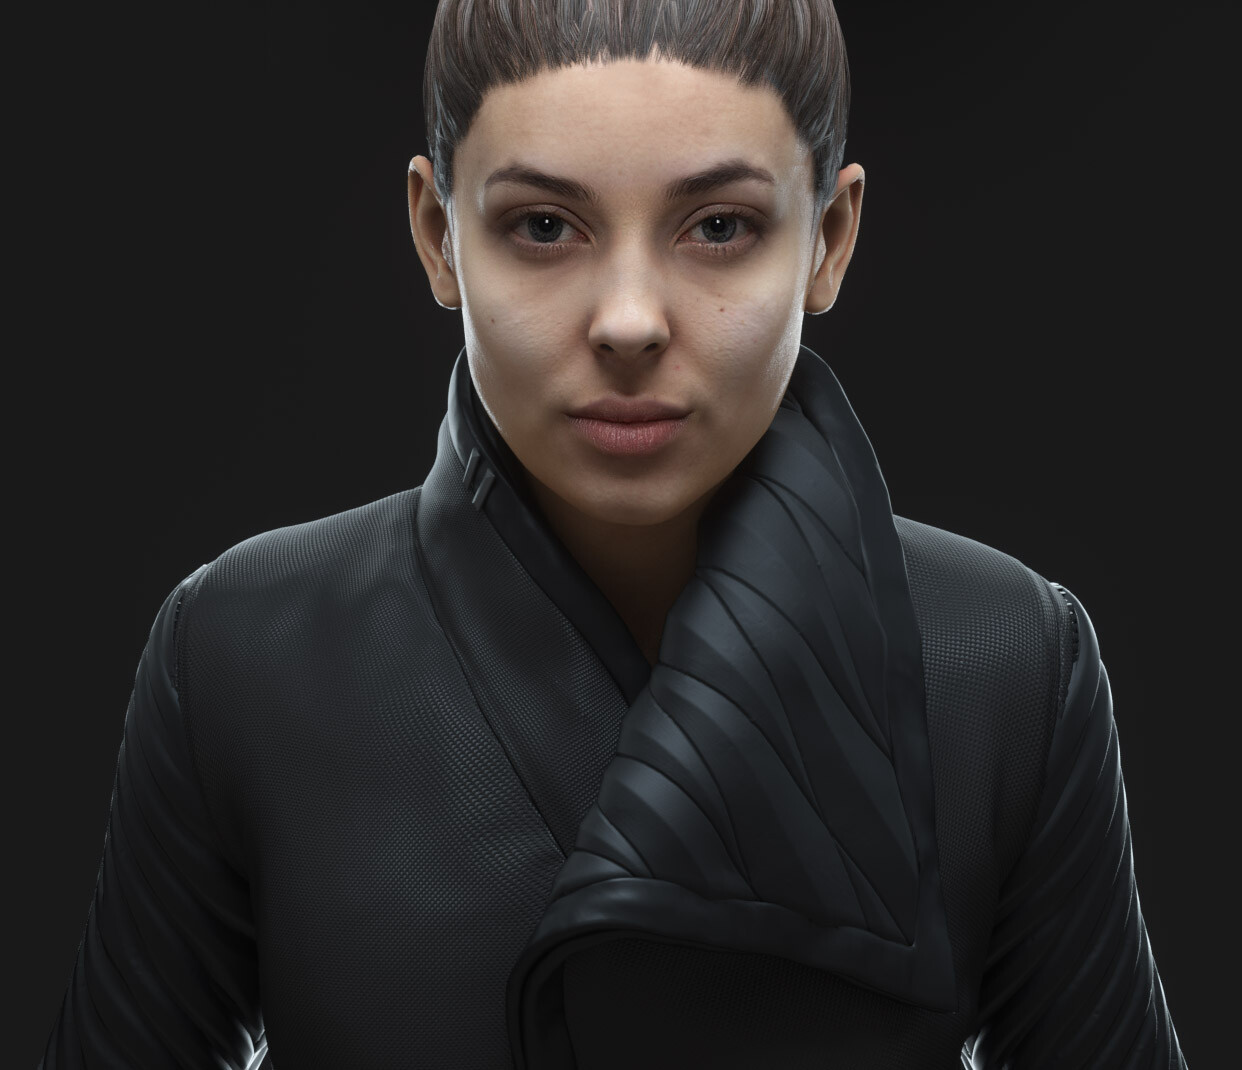 Elana wearing the Cyberpunk Jacket with a Sleeve Variant. 